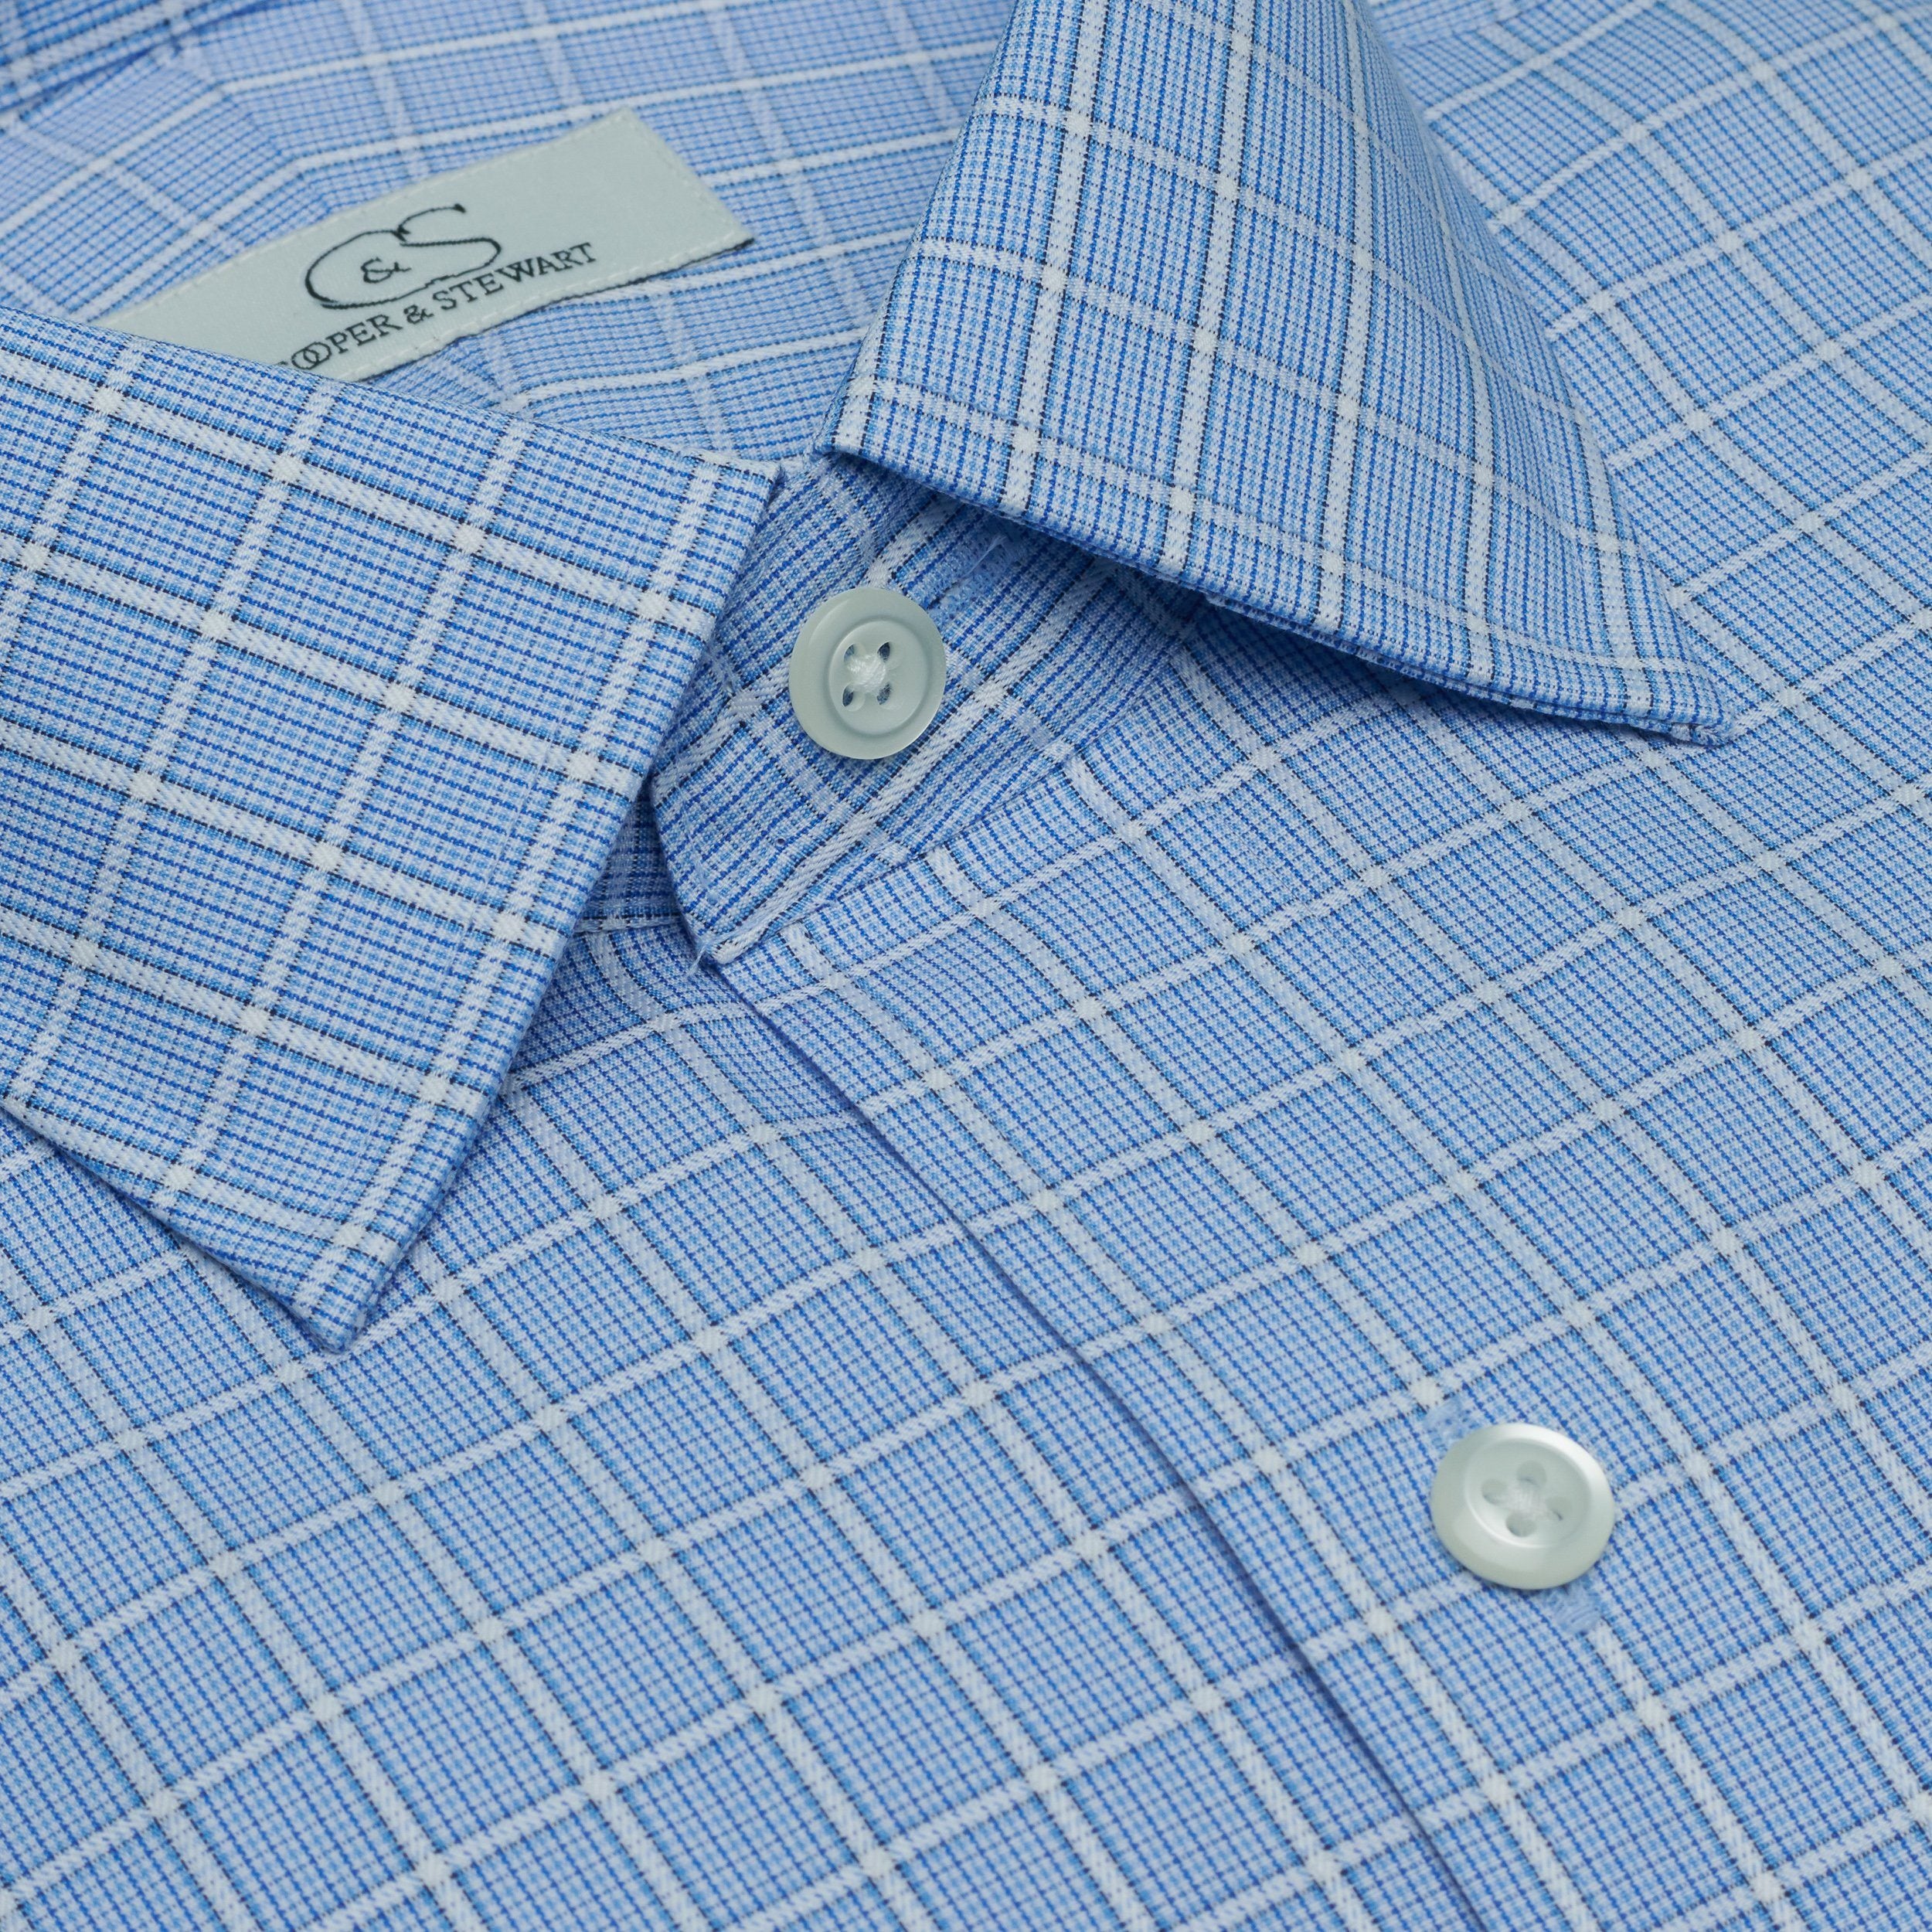 072-Blue Overlay Check-Spread Collar-Tailor Fit Best Dress Shirt 